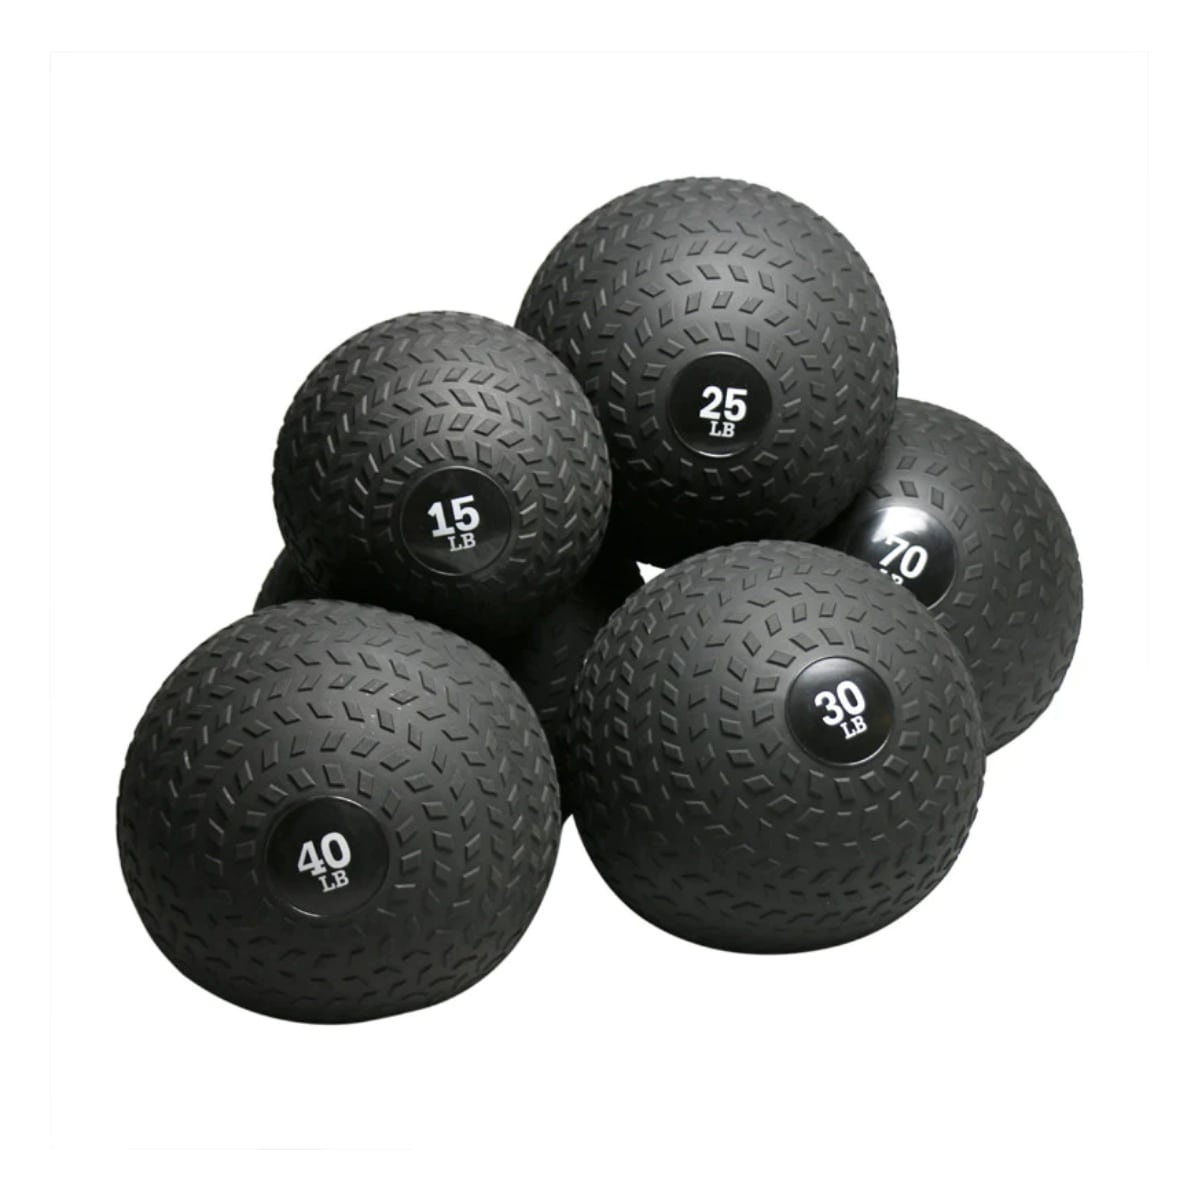 Brug American barbell AmericanBarbell Slam ball 20 lb til en forbedret oplevelse